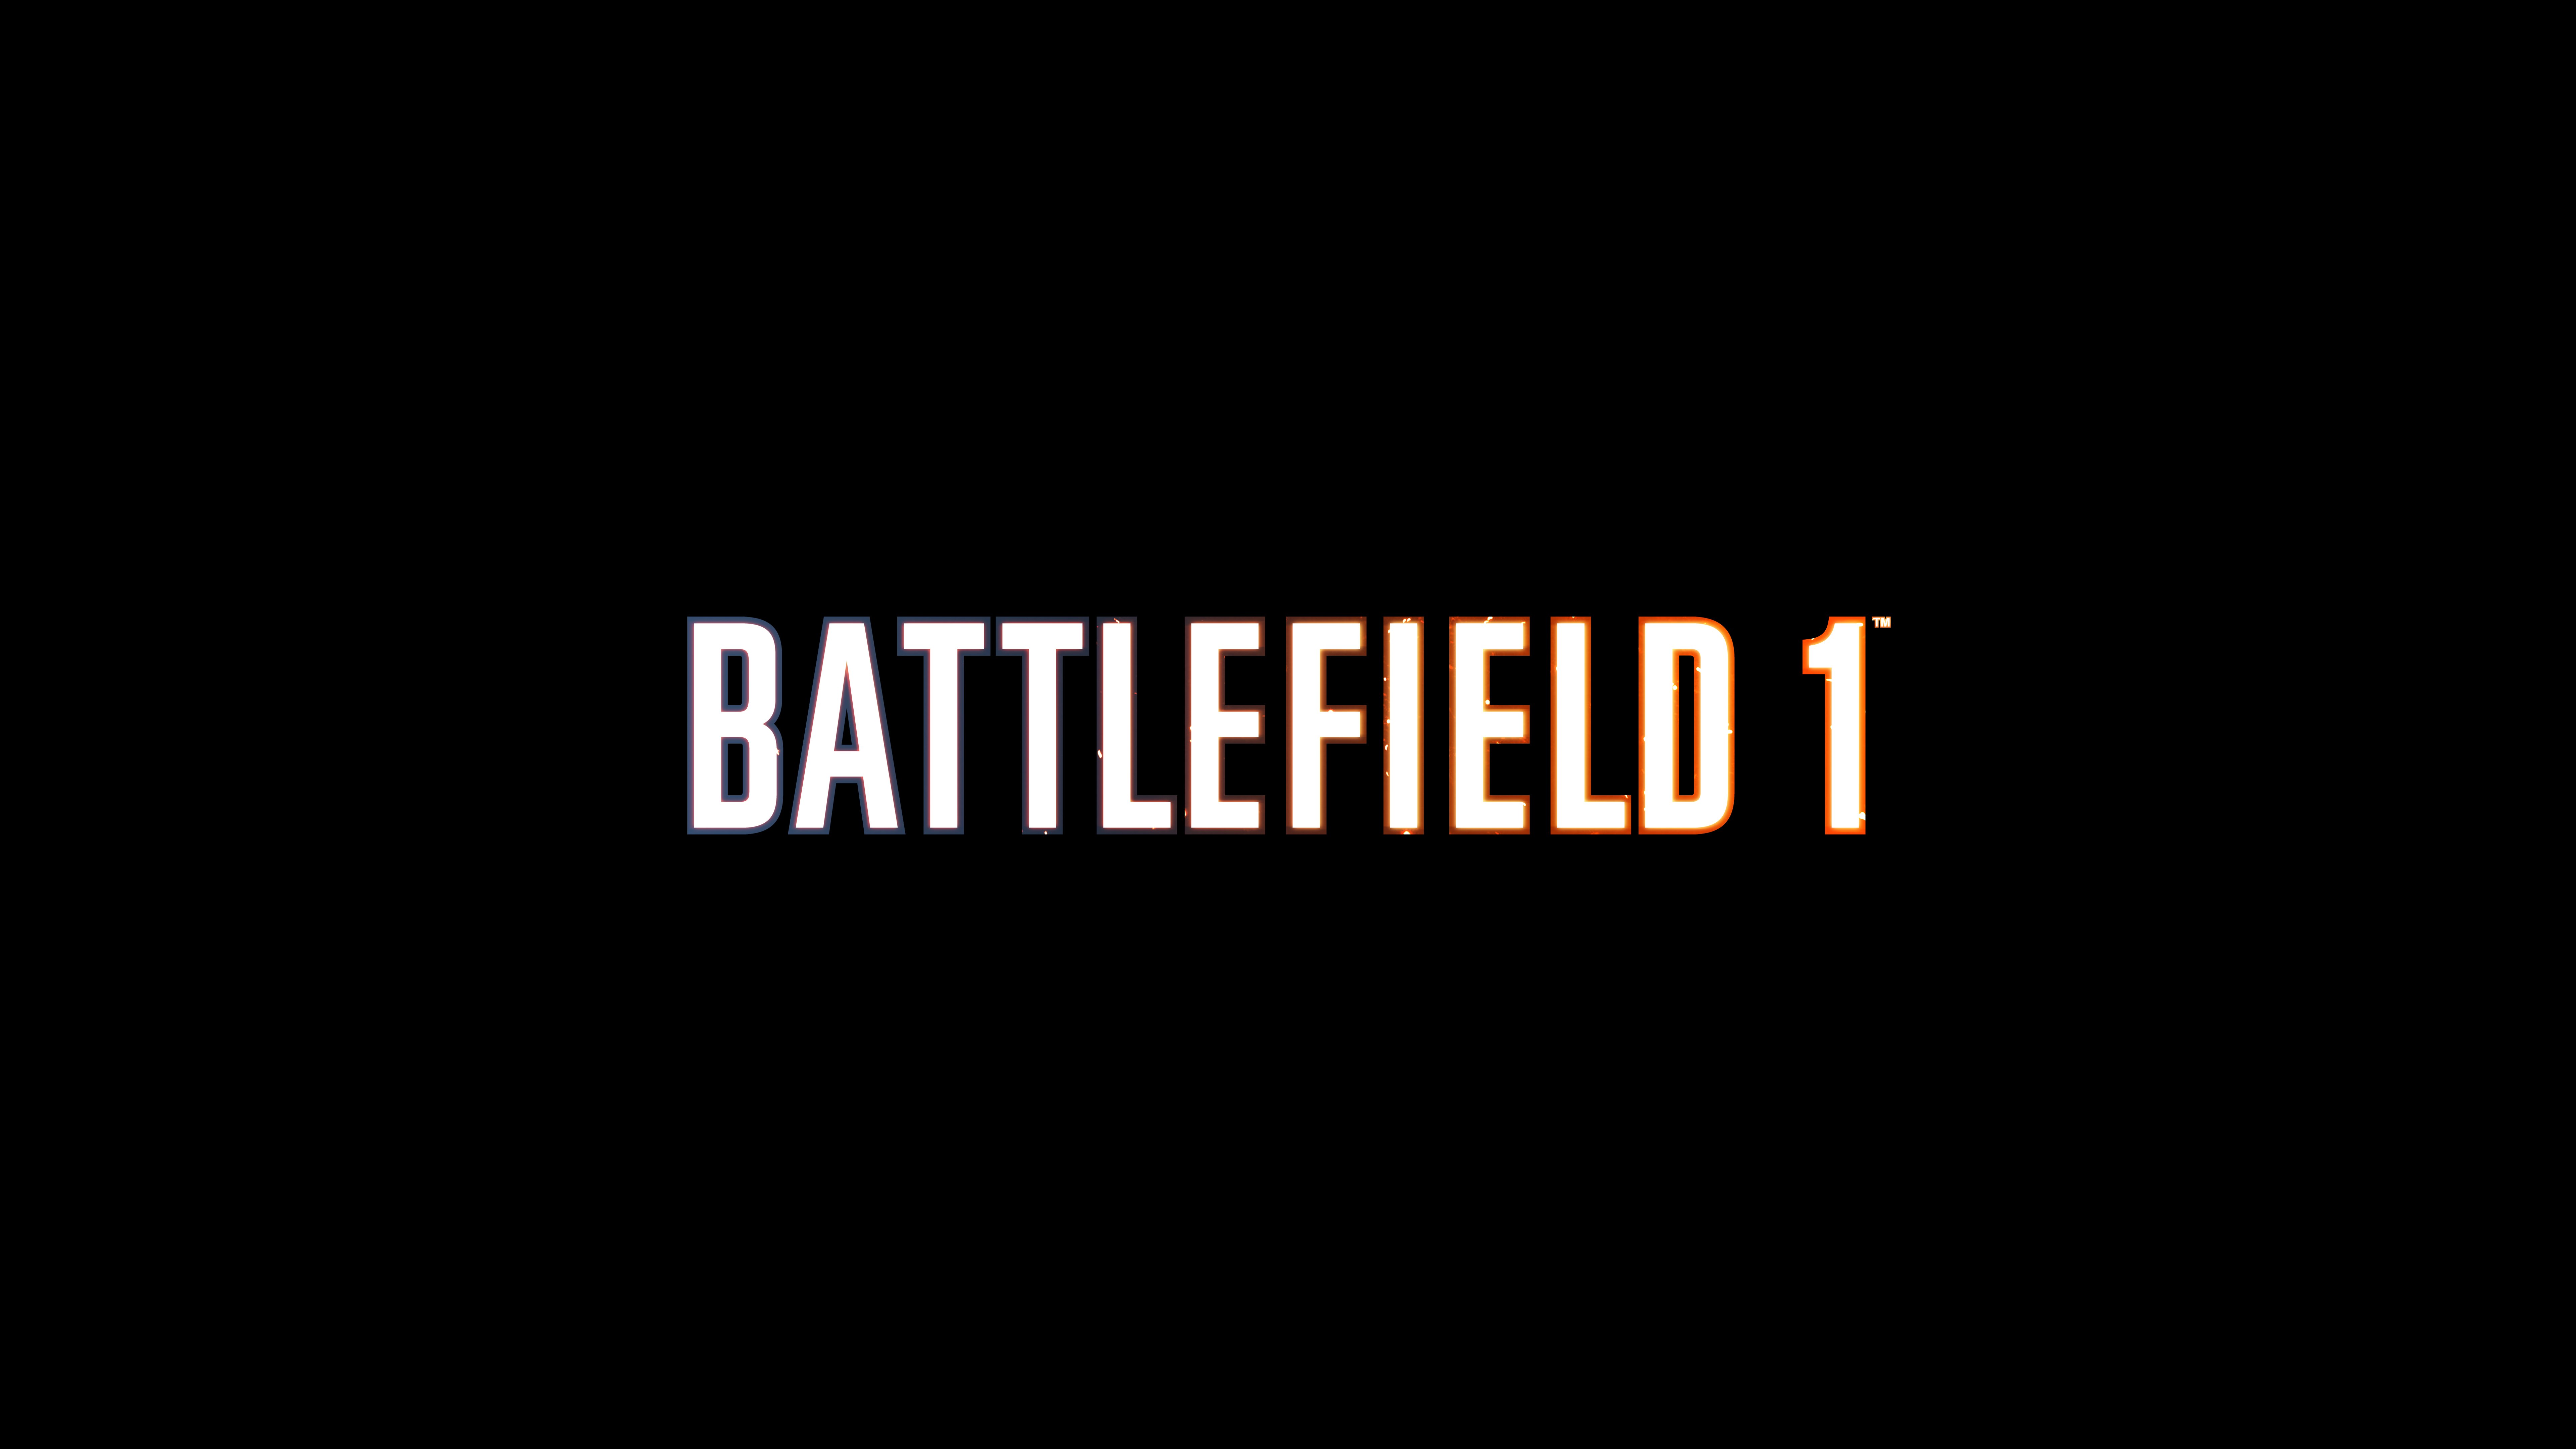 battlefield 1, video game, logo, battlefield